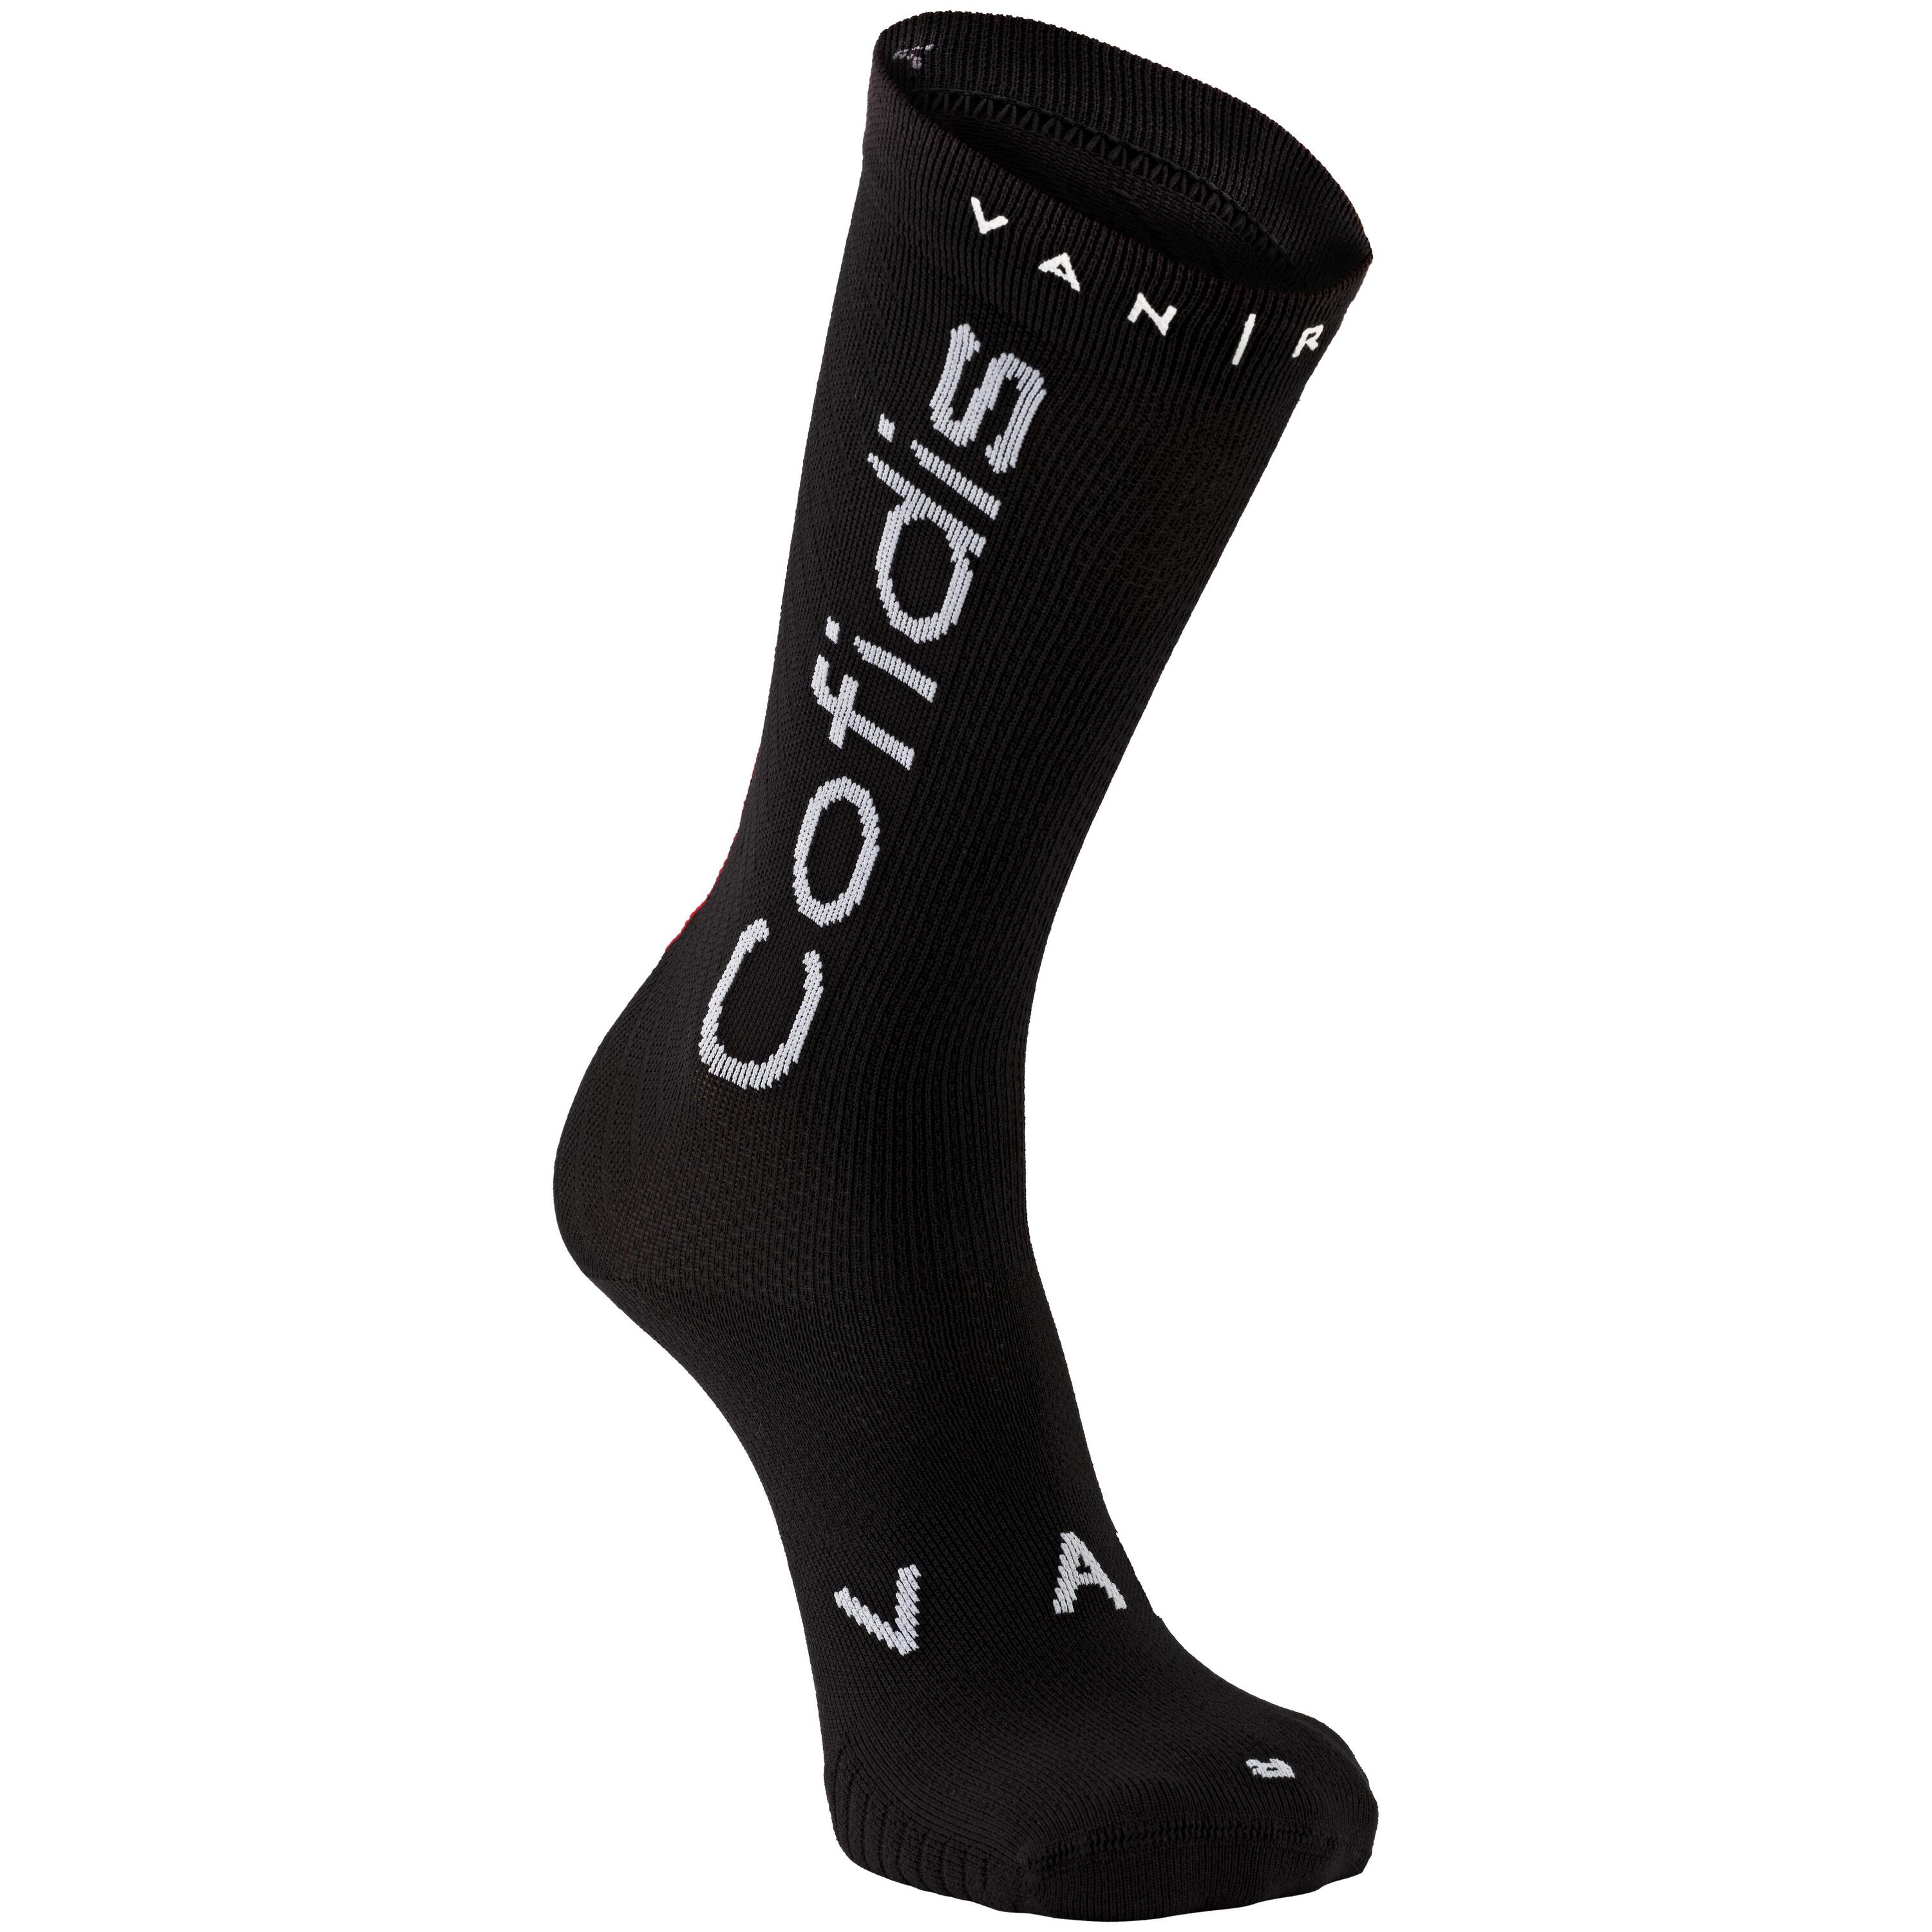 VAN RYSEL Cofidis Replica Road Cycling Socks - Black